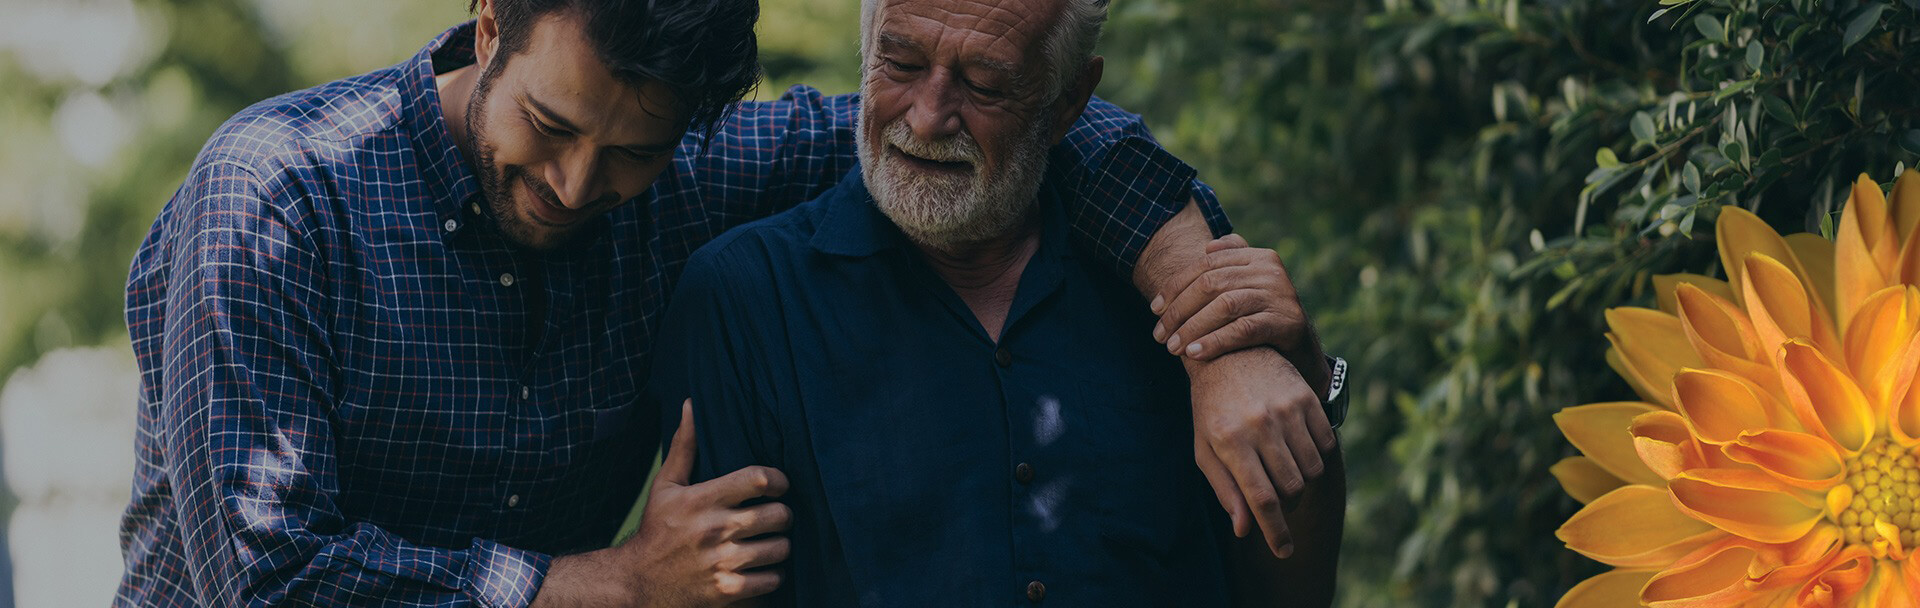 a man and an elderly man embracing